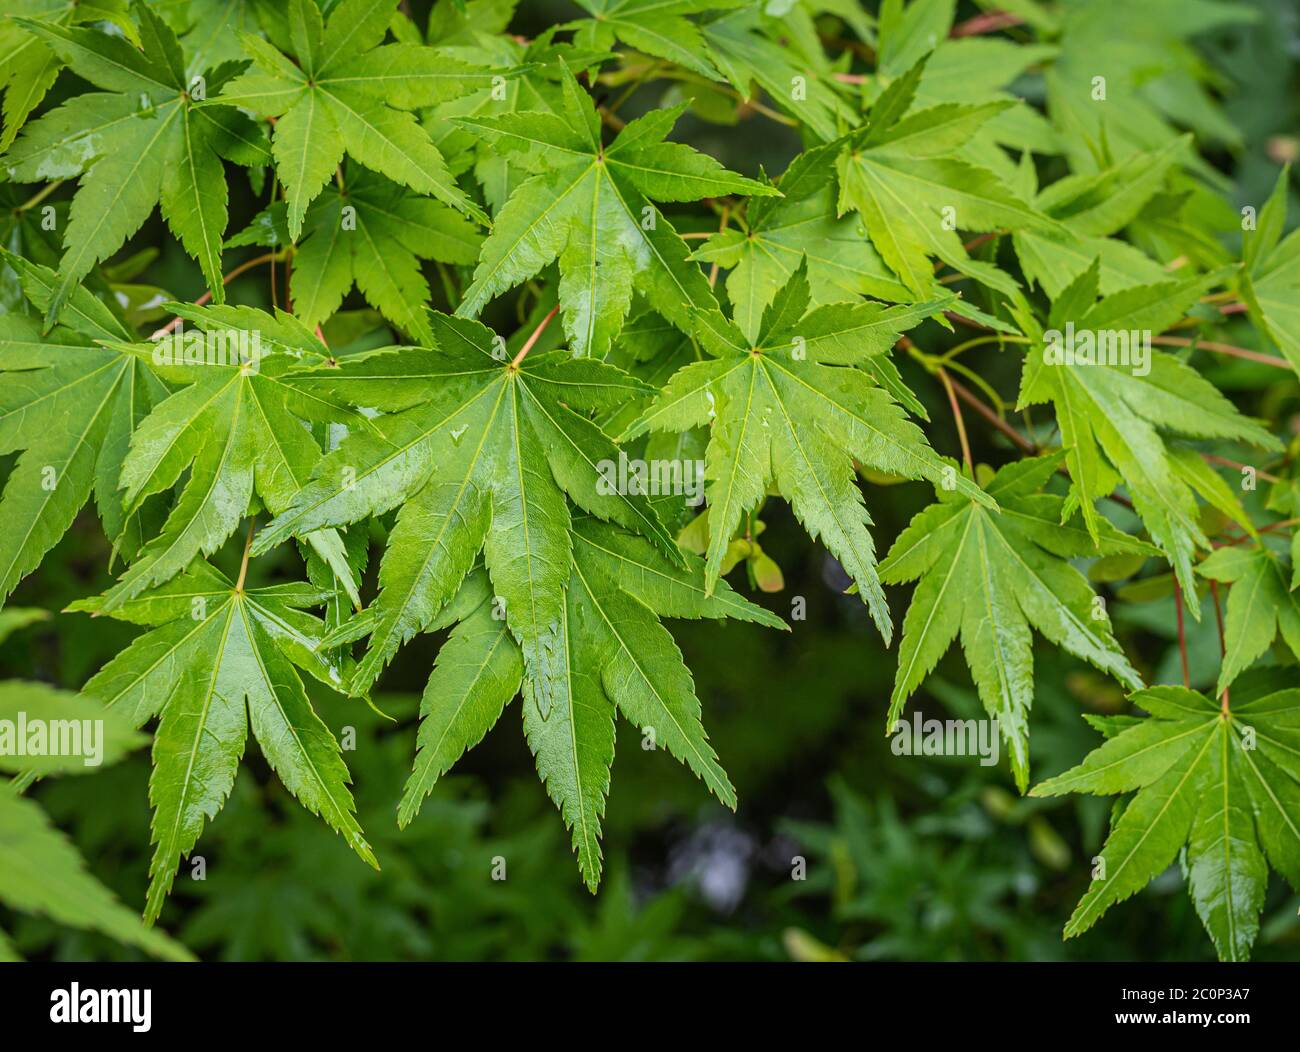 Hojas verdes en las ramas del arce japonés verde campana (Acer palmatum) Foto de stock